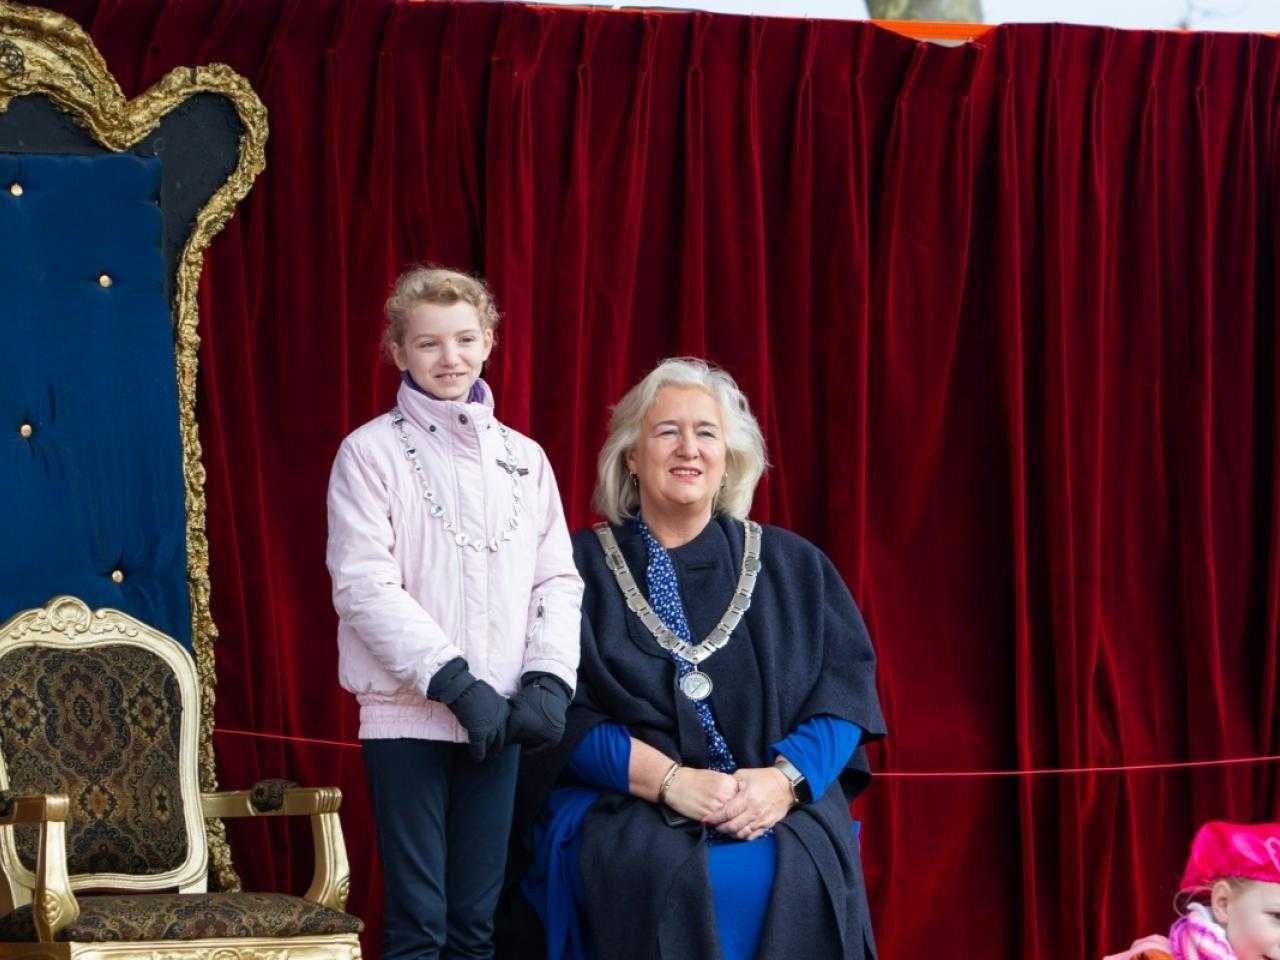 Children's mayor with the mayor in a photo during Sinterklaas celebration